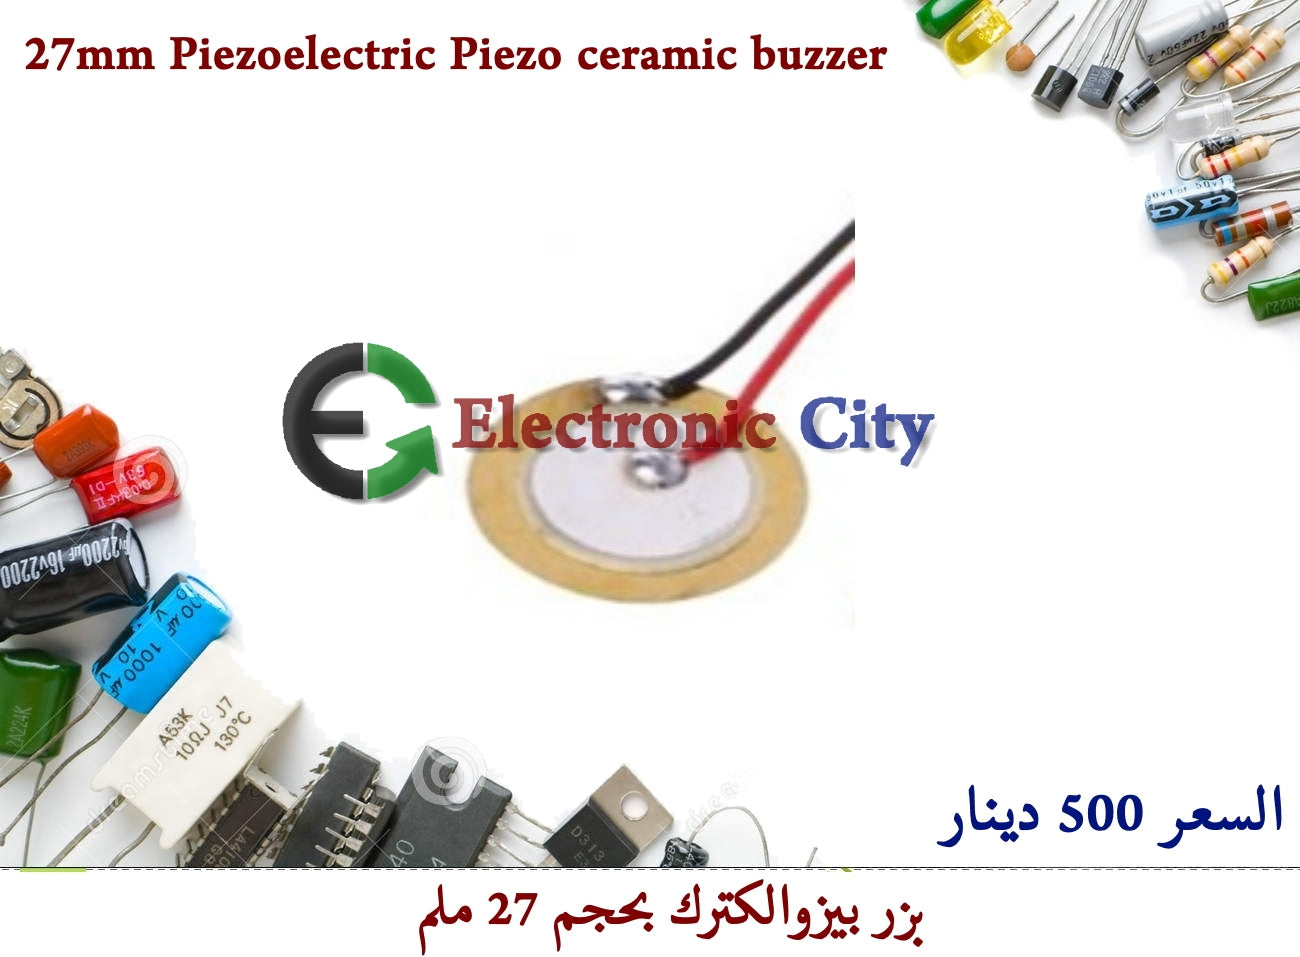 27mm Piezoelectric Piezo ceramic buzzer